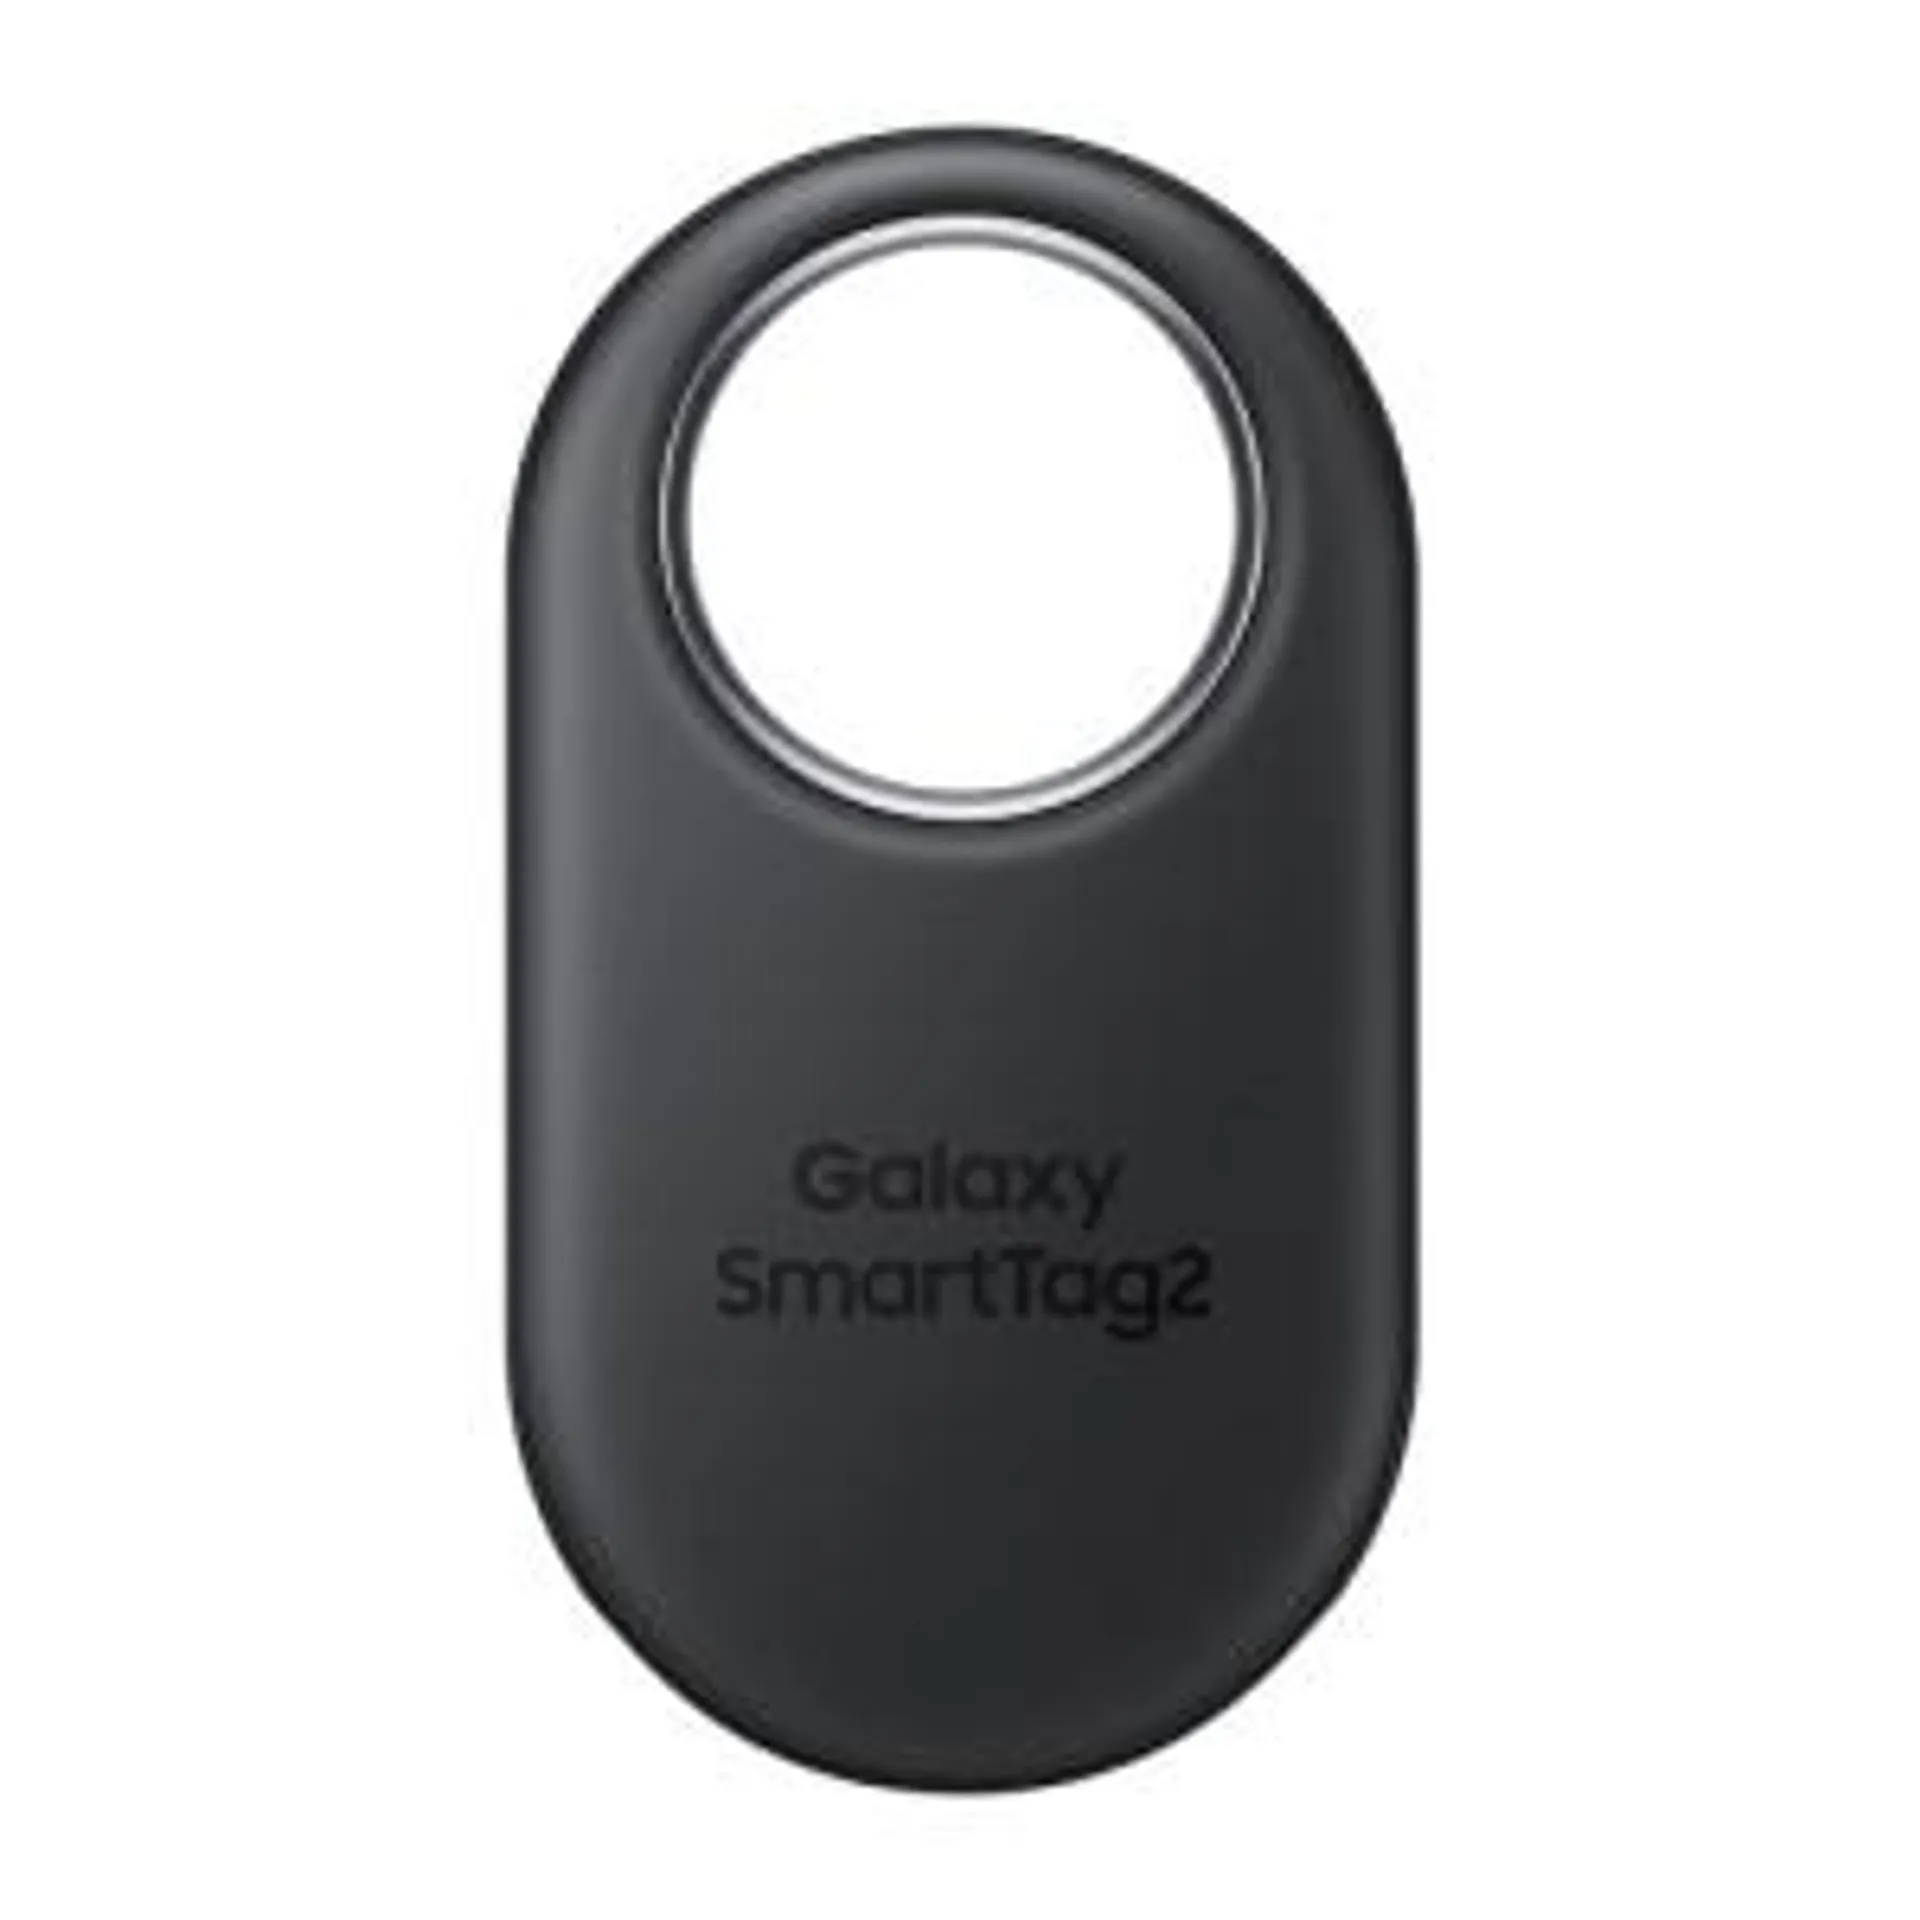 Galaxy SmartTag2 (1 pack)